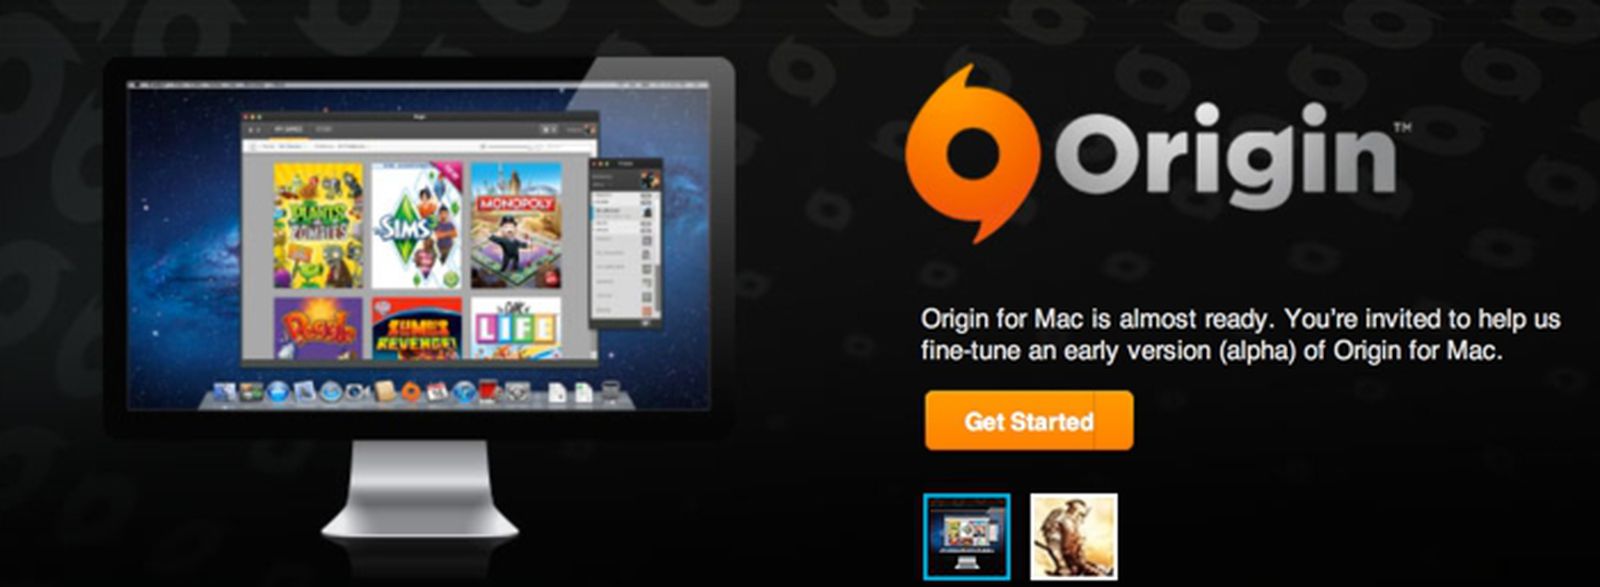 EA Launches Origin Online Game Distribution for Mac - MacRumors